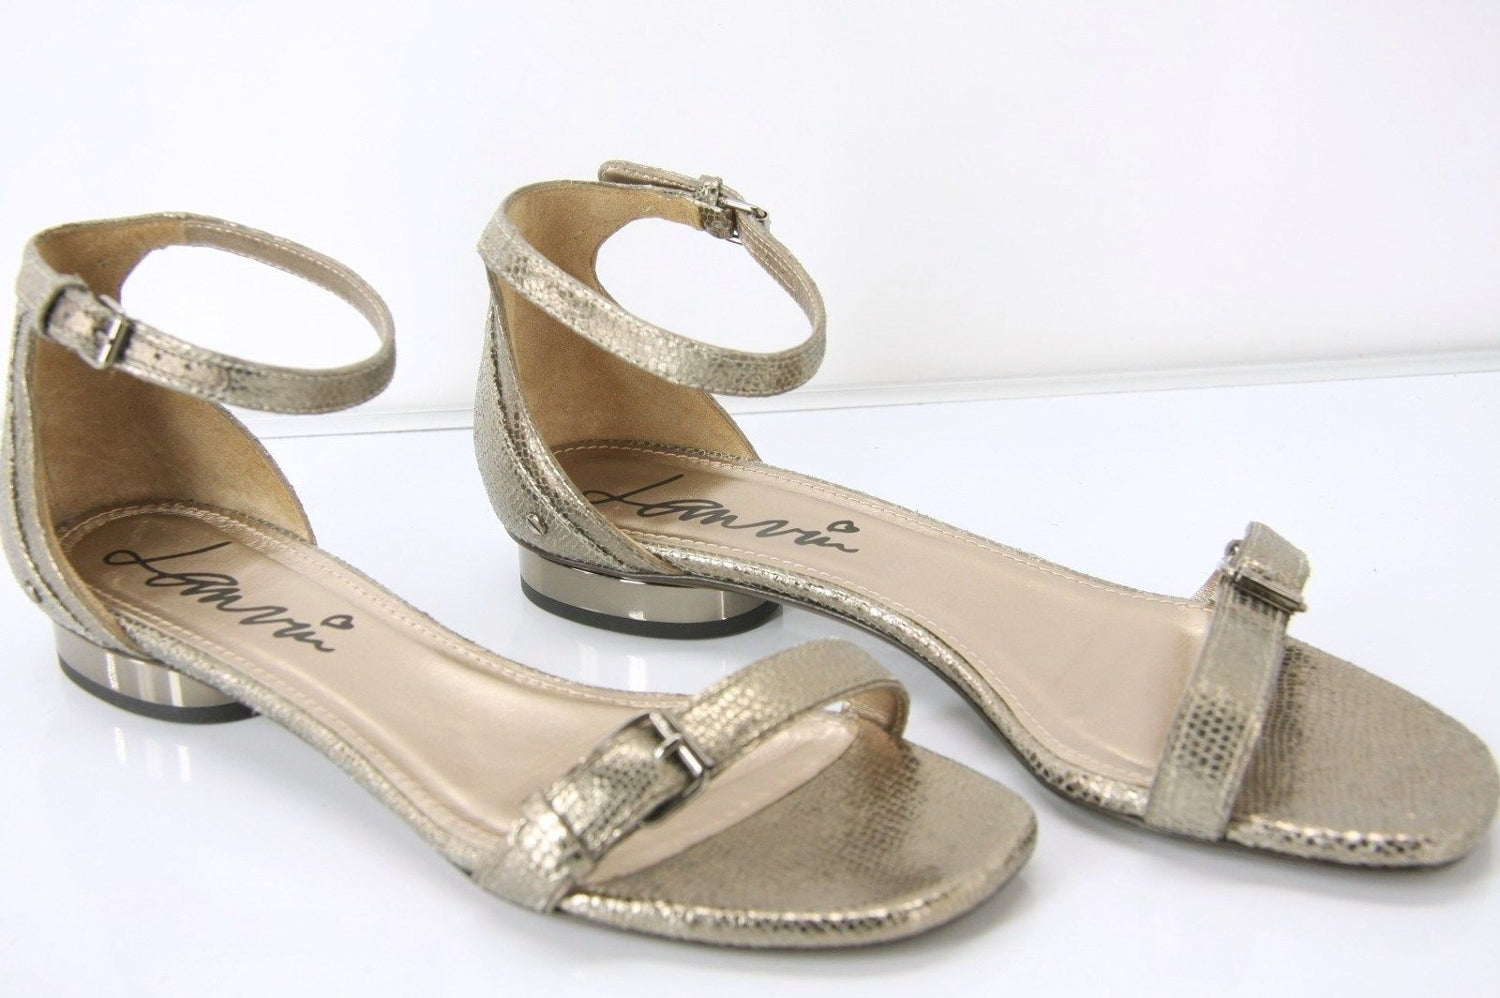 Lanvin Gold Snake Print Ankle Strappy Block Heel Flat Sandal SZ 37.5 New $790